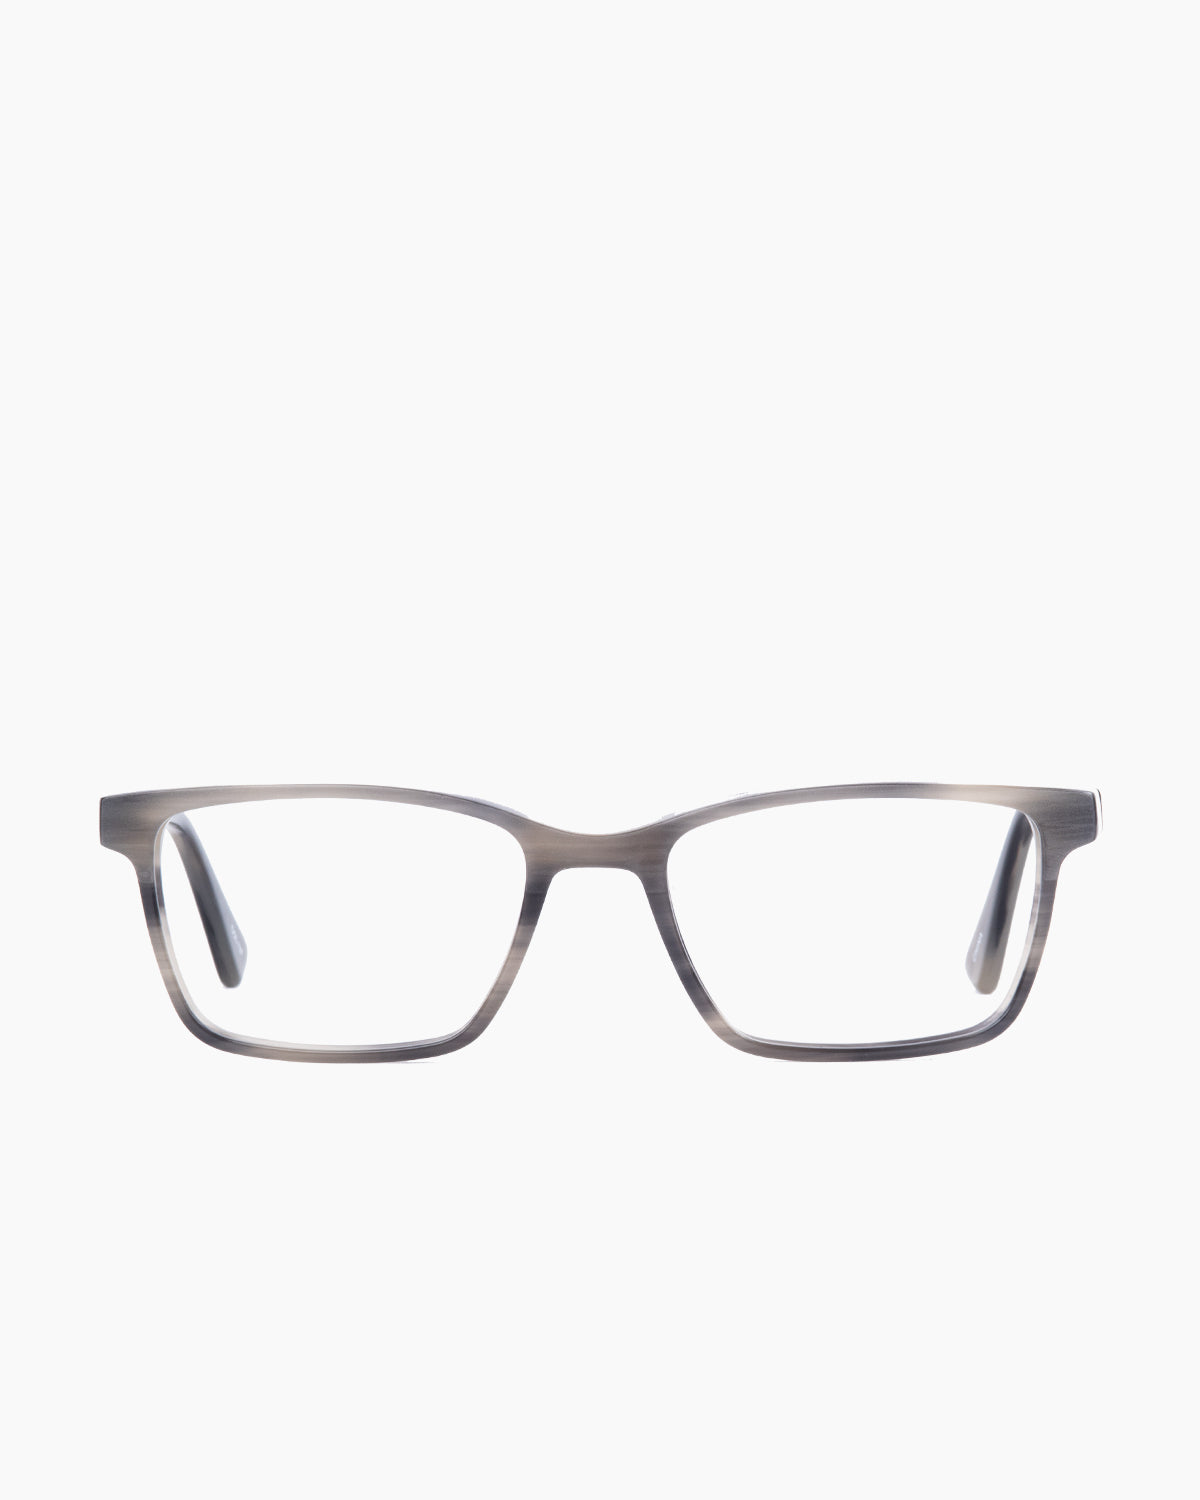 Evolve - Garfield - 137 | glasses bar:  Marie-Sophie Dion